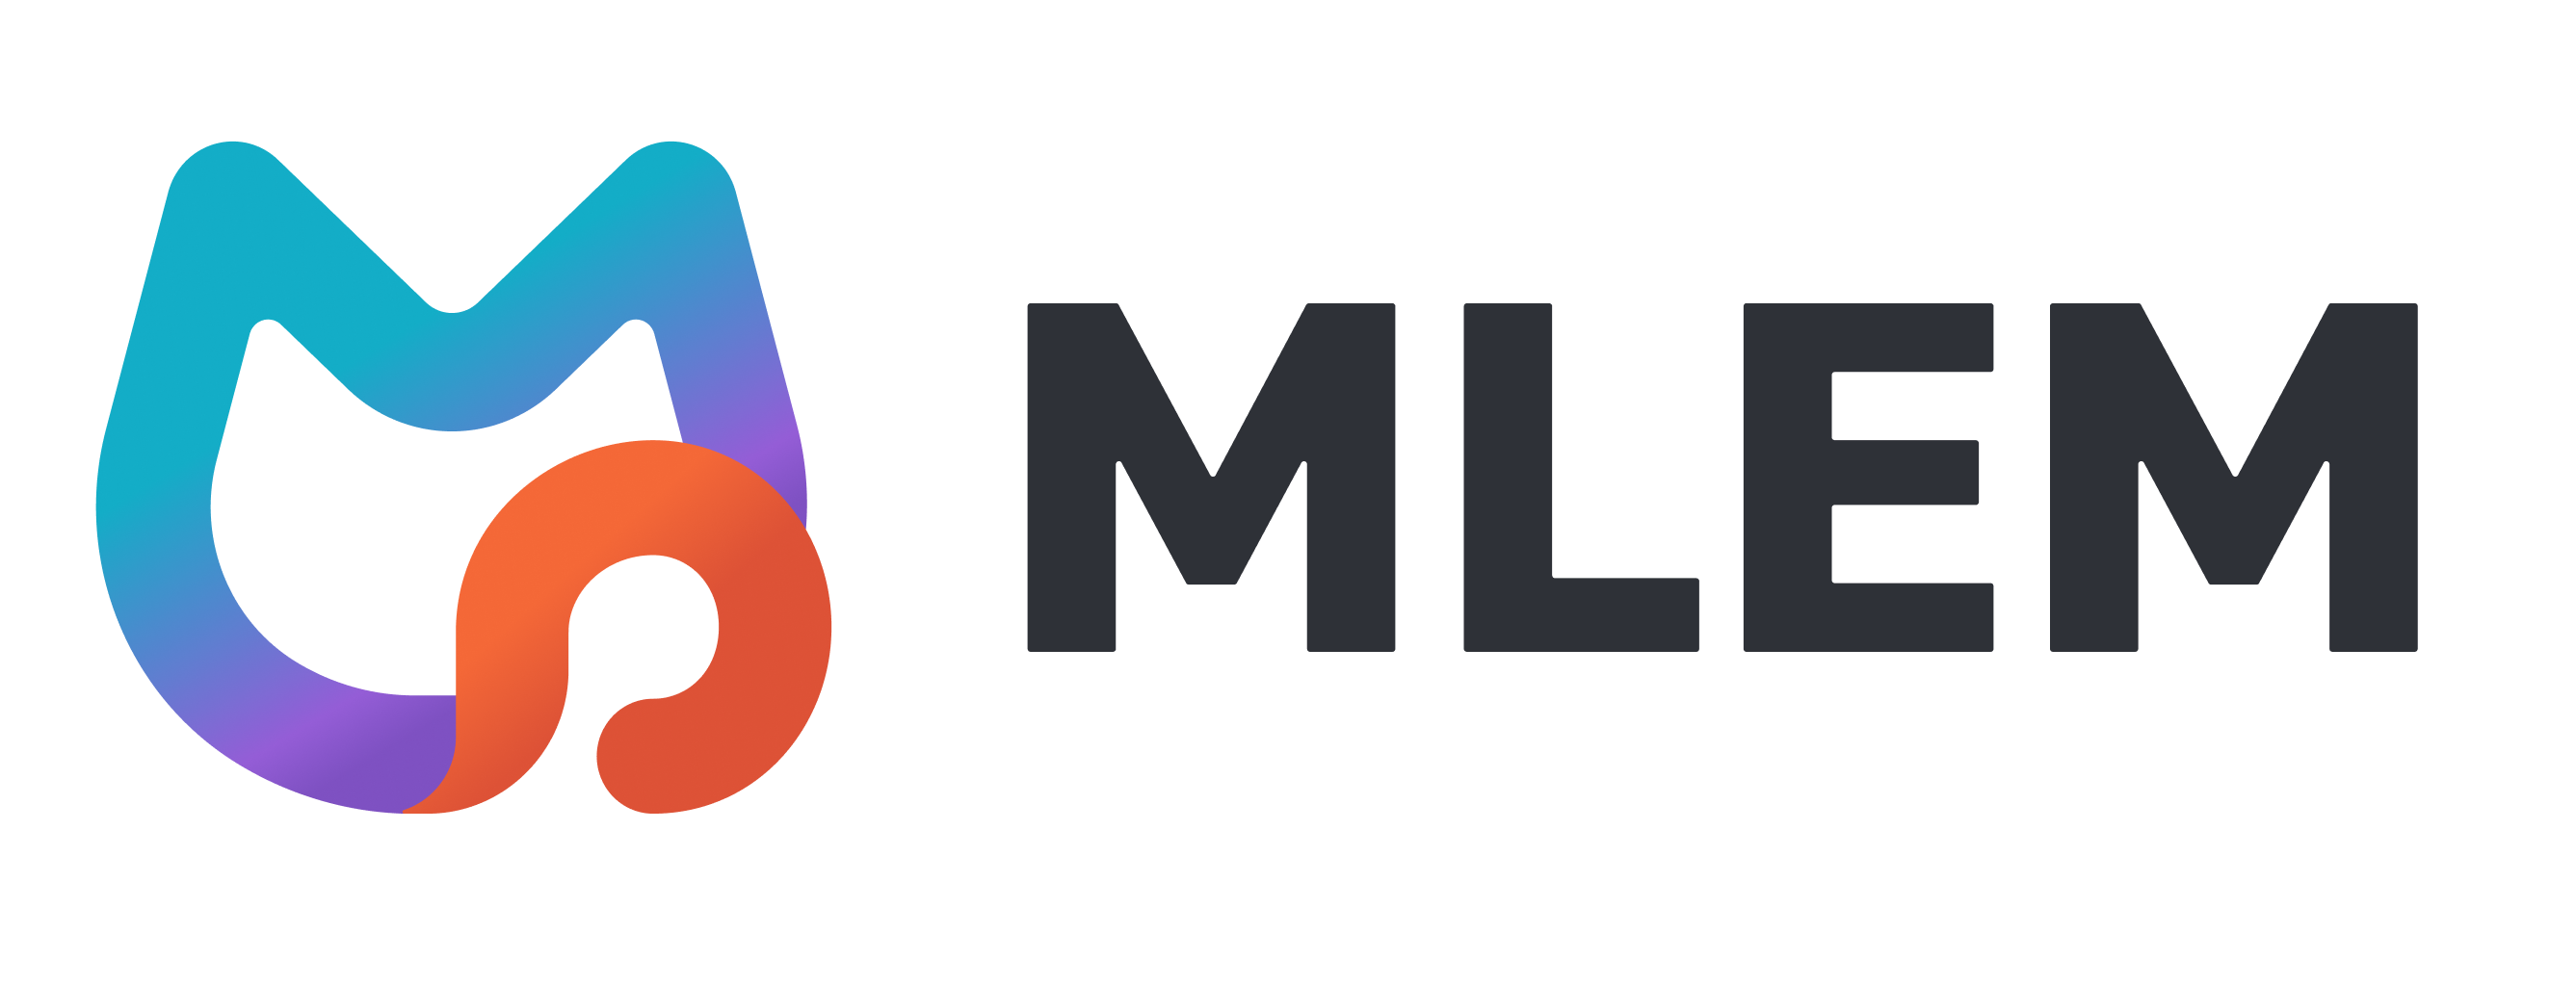 MLEM by Iterative